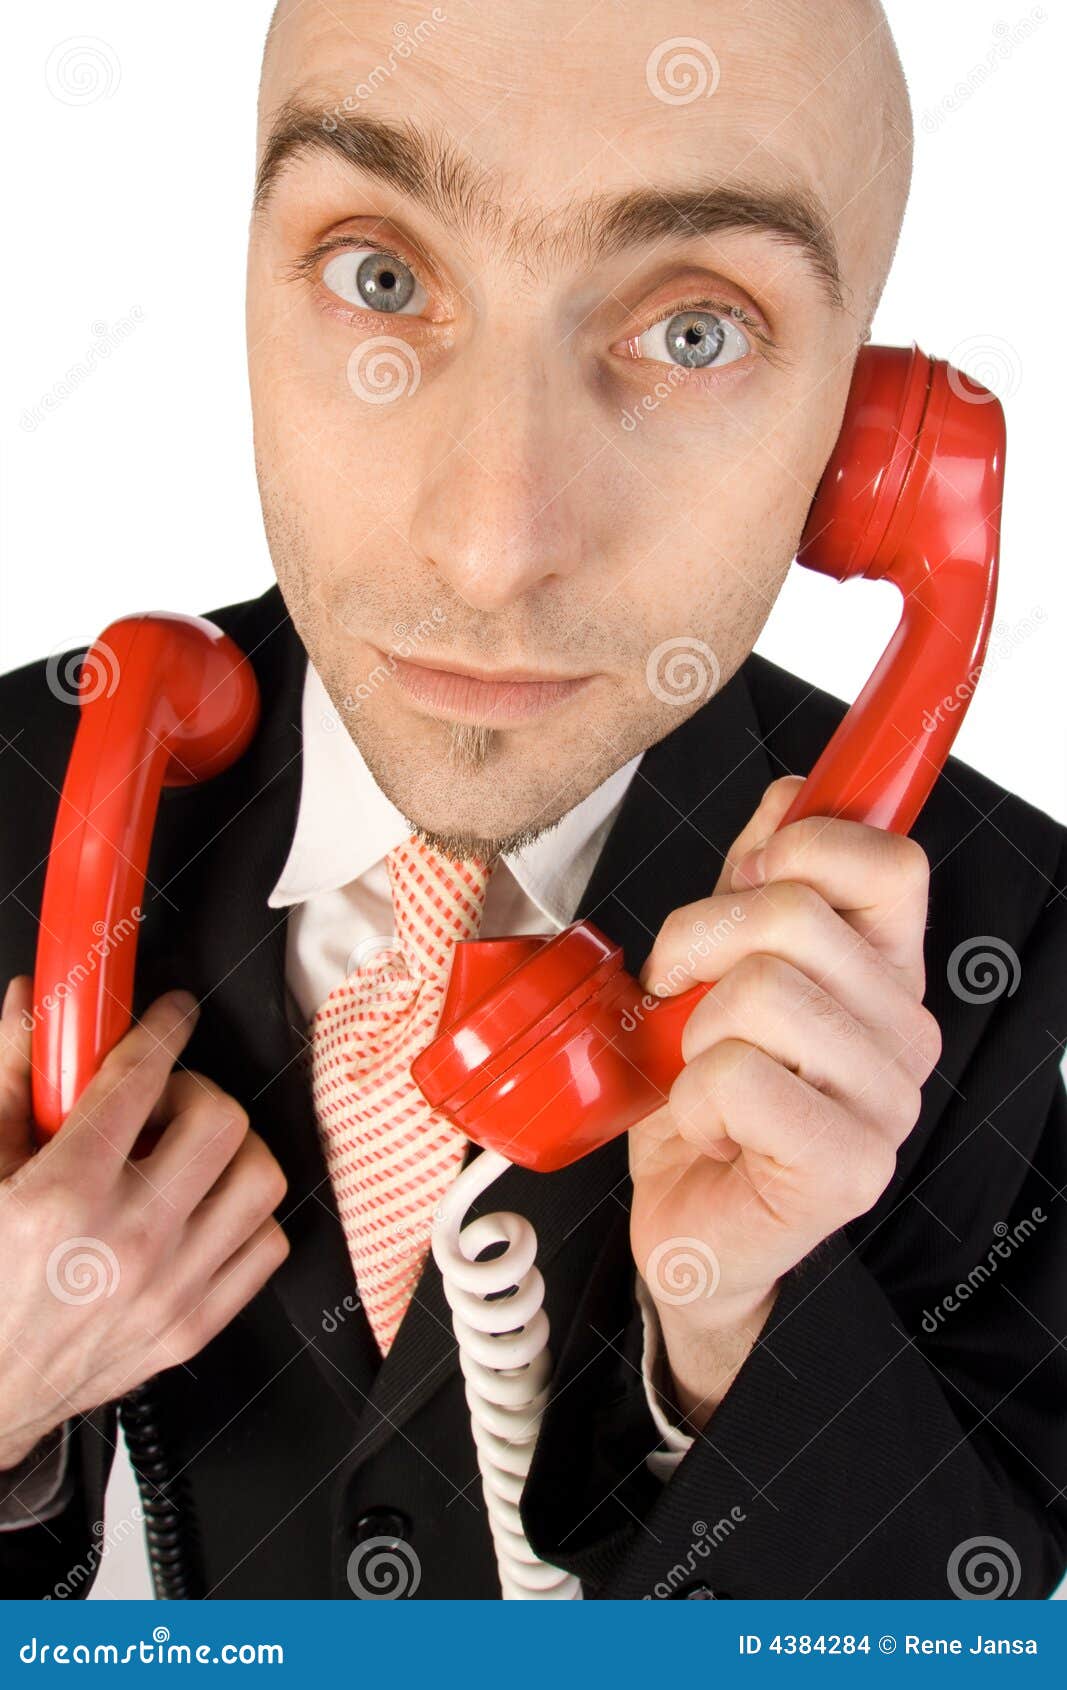 phone calls